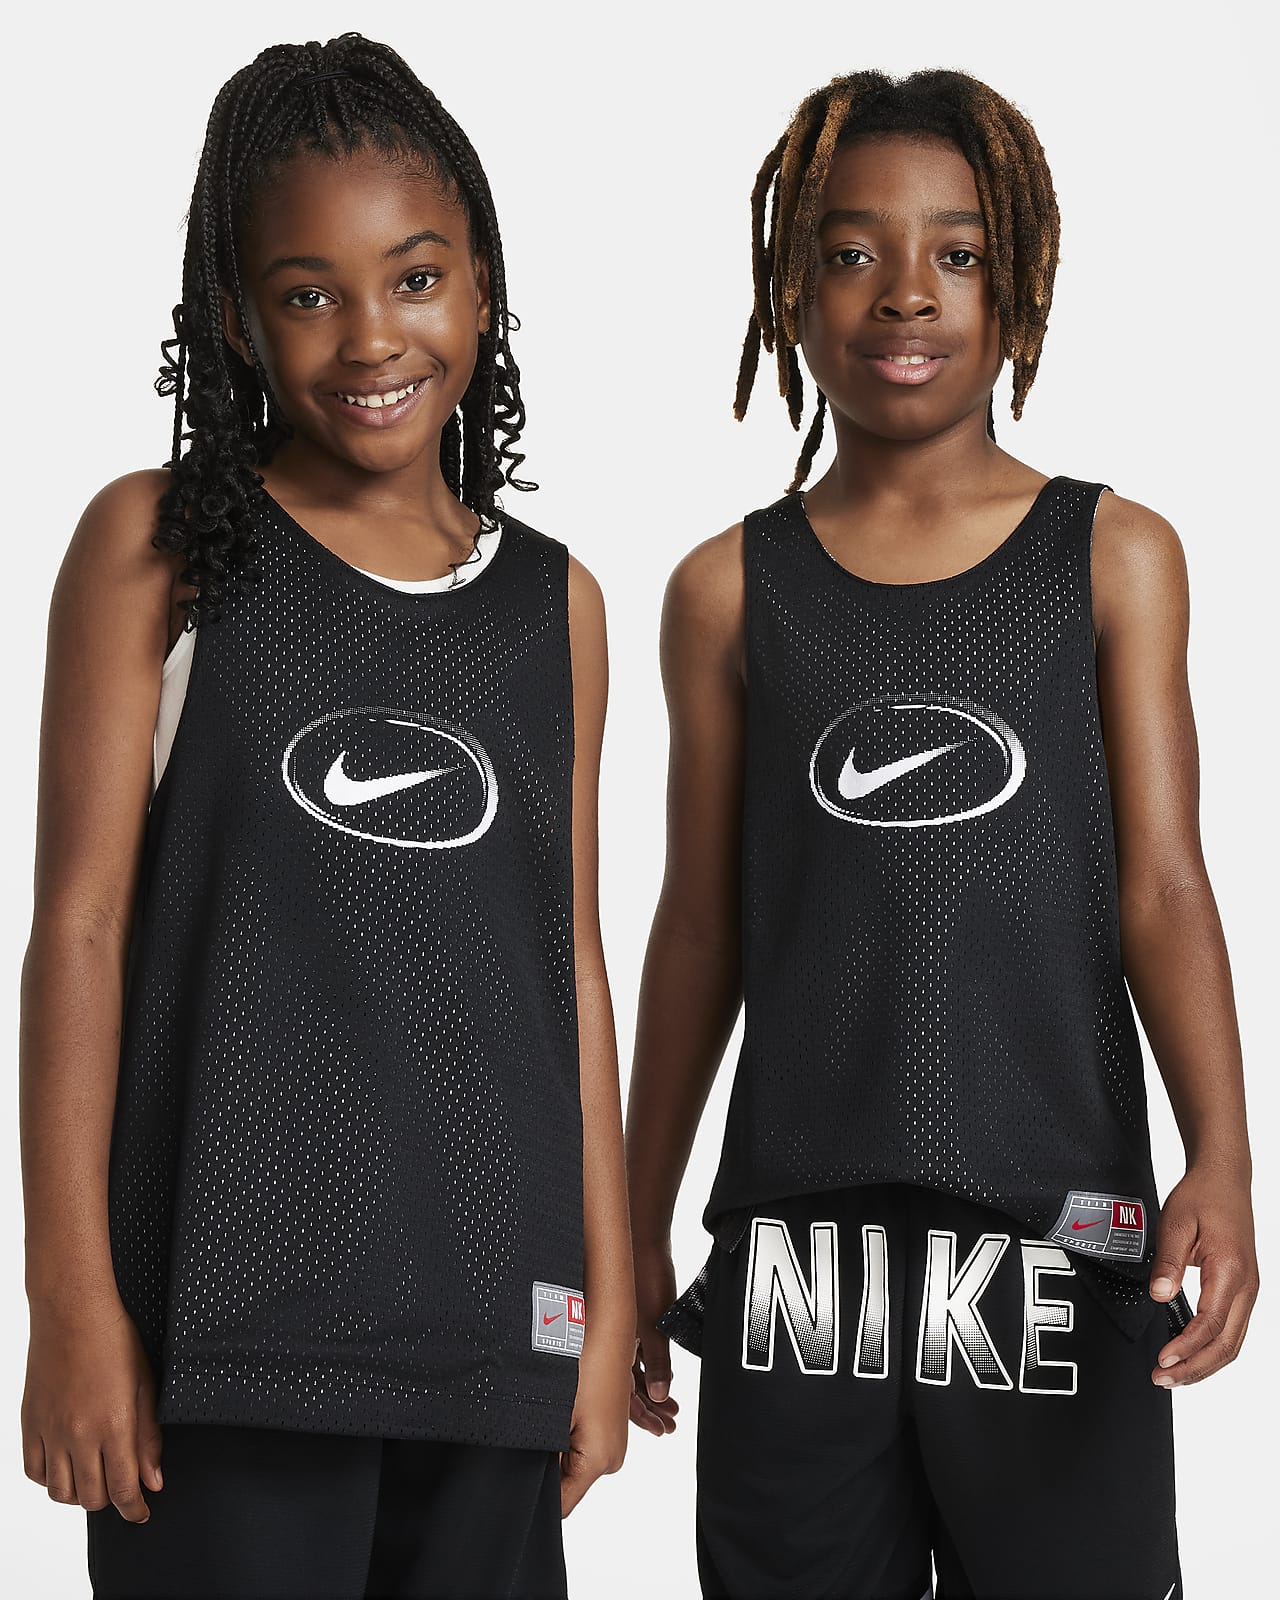 Nike Culture of Basketball omkeerbare jersey voor kids